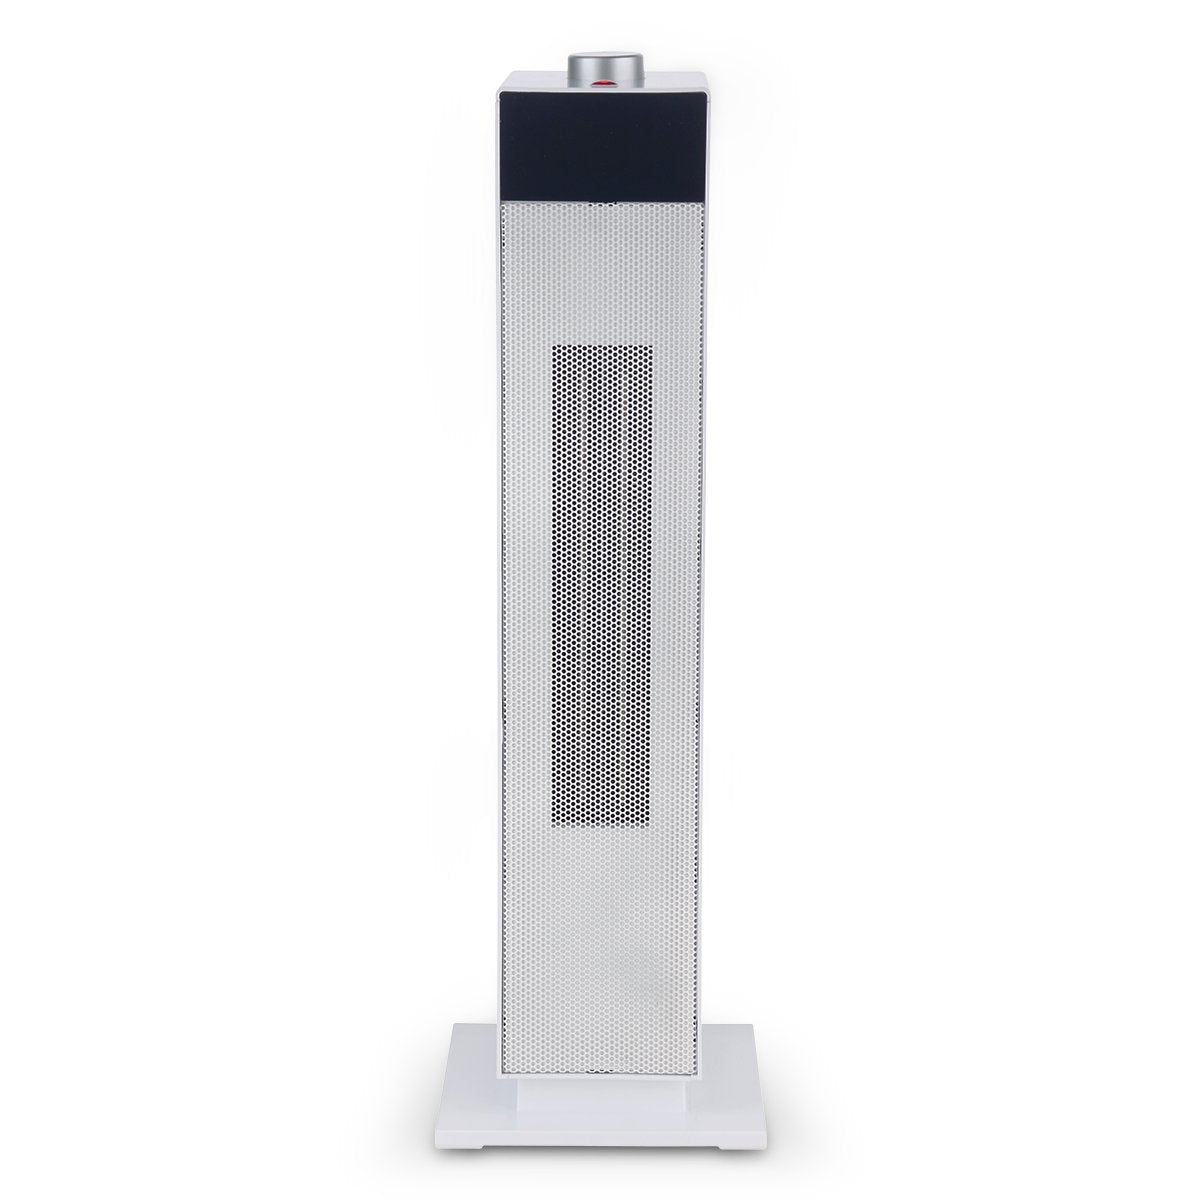 2000W Electric PTC Ceramic Tower Heater Remote Control Portable Oscillating White